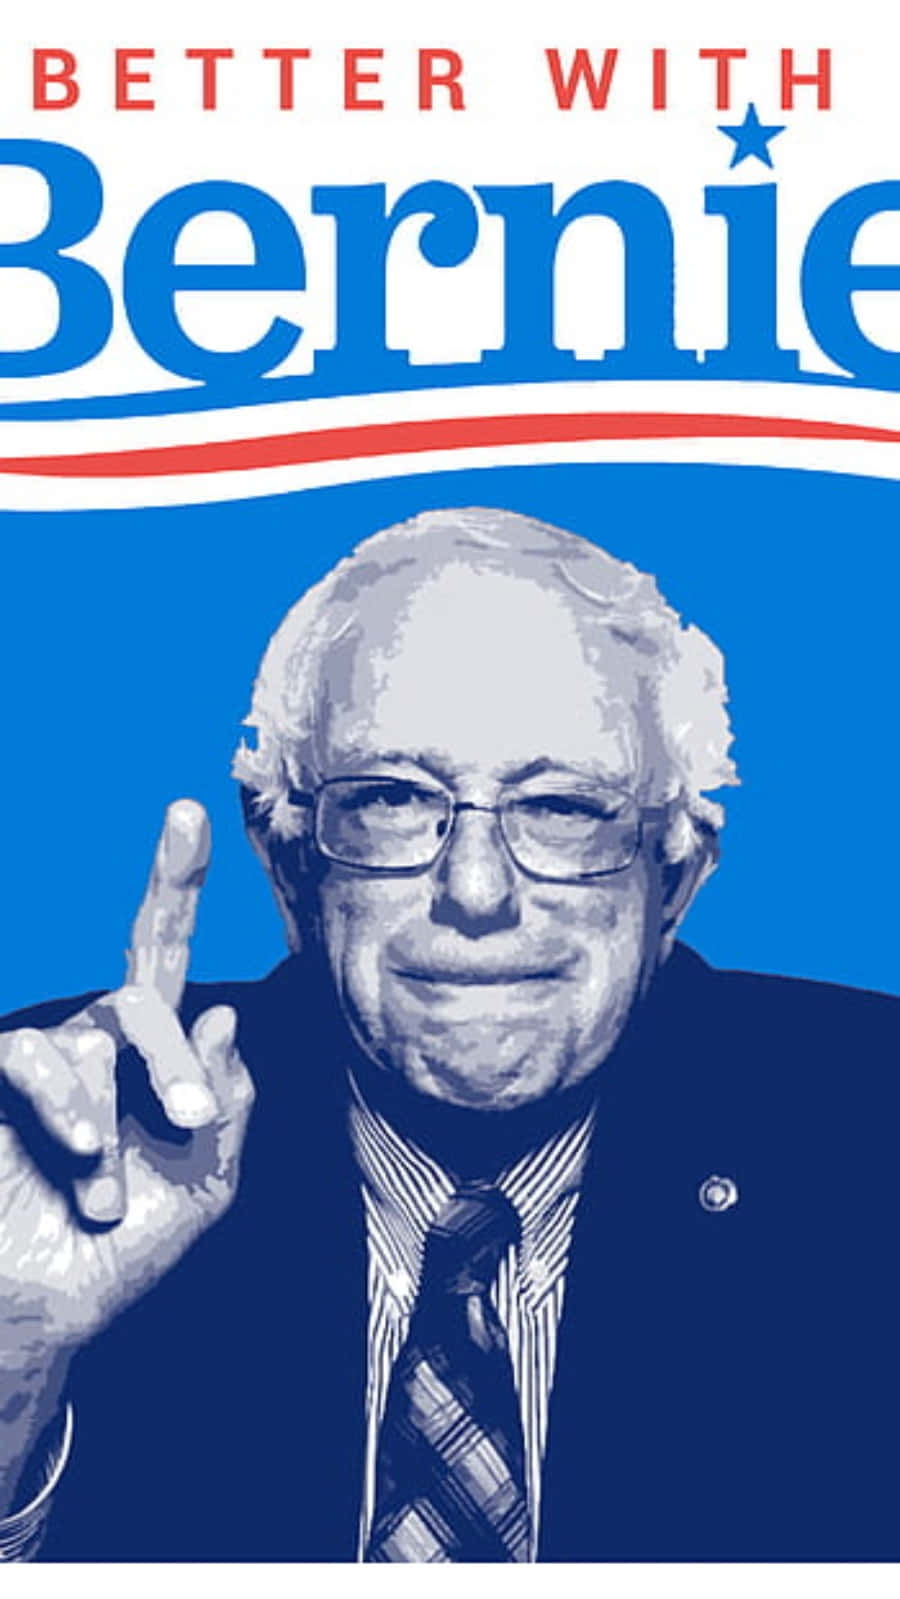 Better With Bernie Political Poster Wallpaper